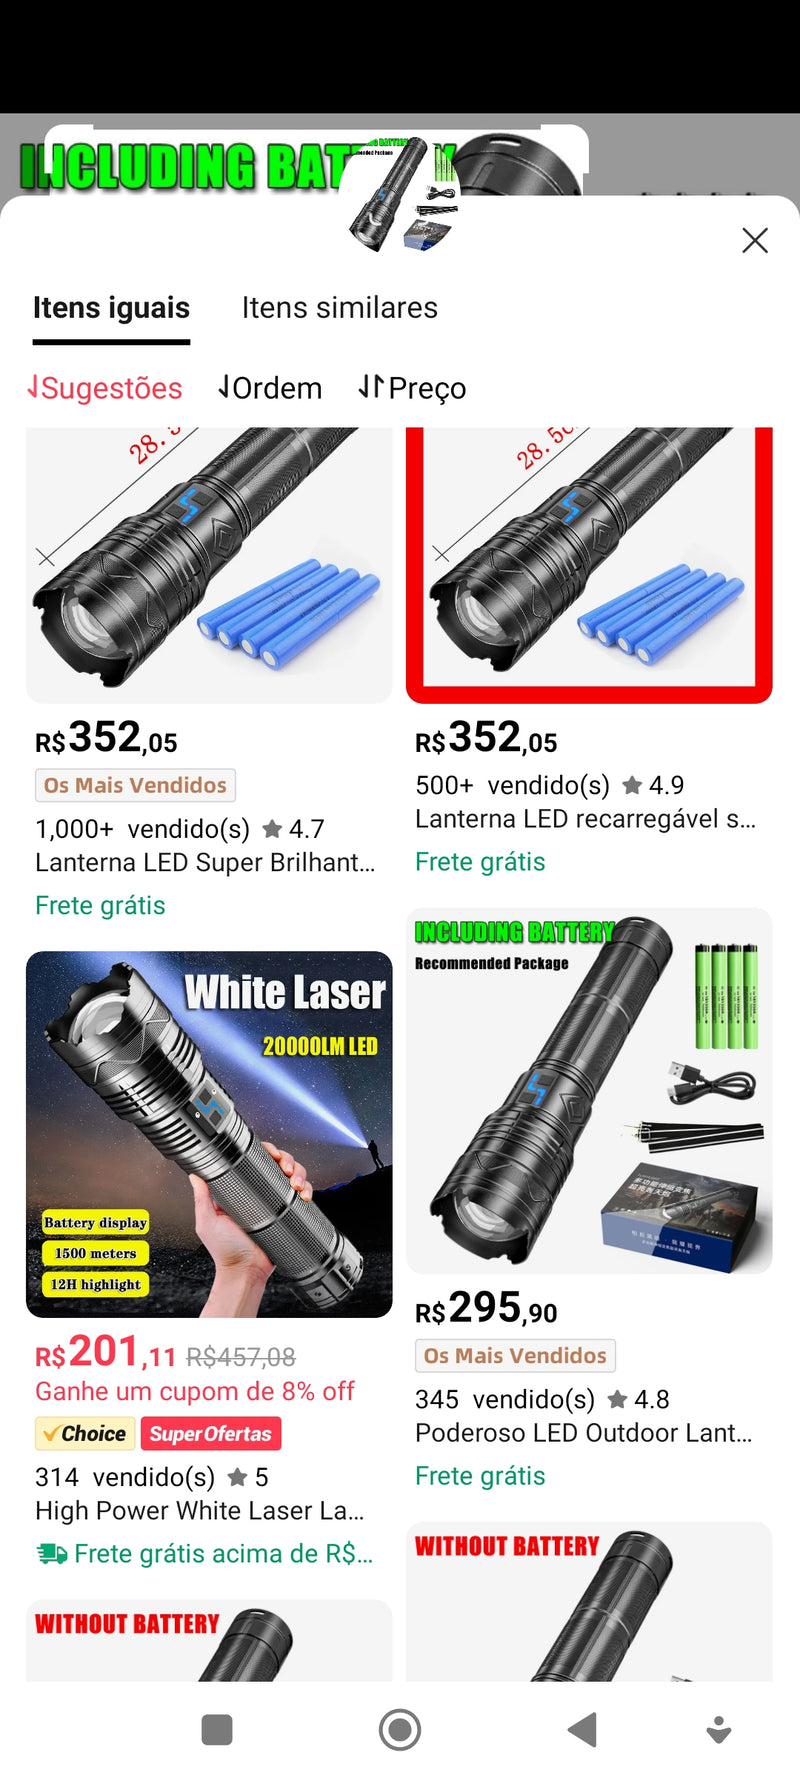 Lanterna Tática Super Brilhante Powerful LED